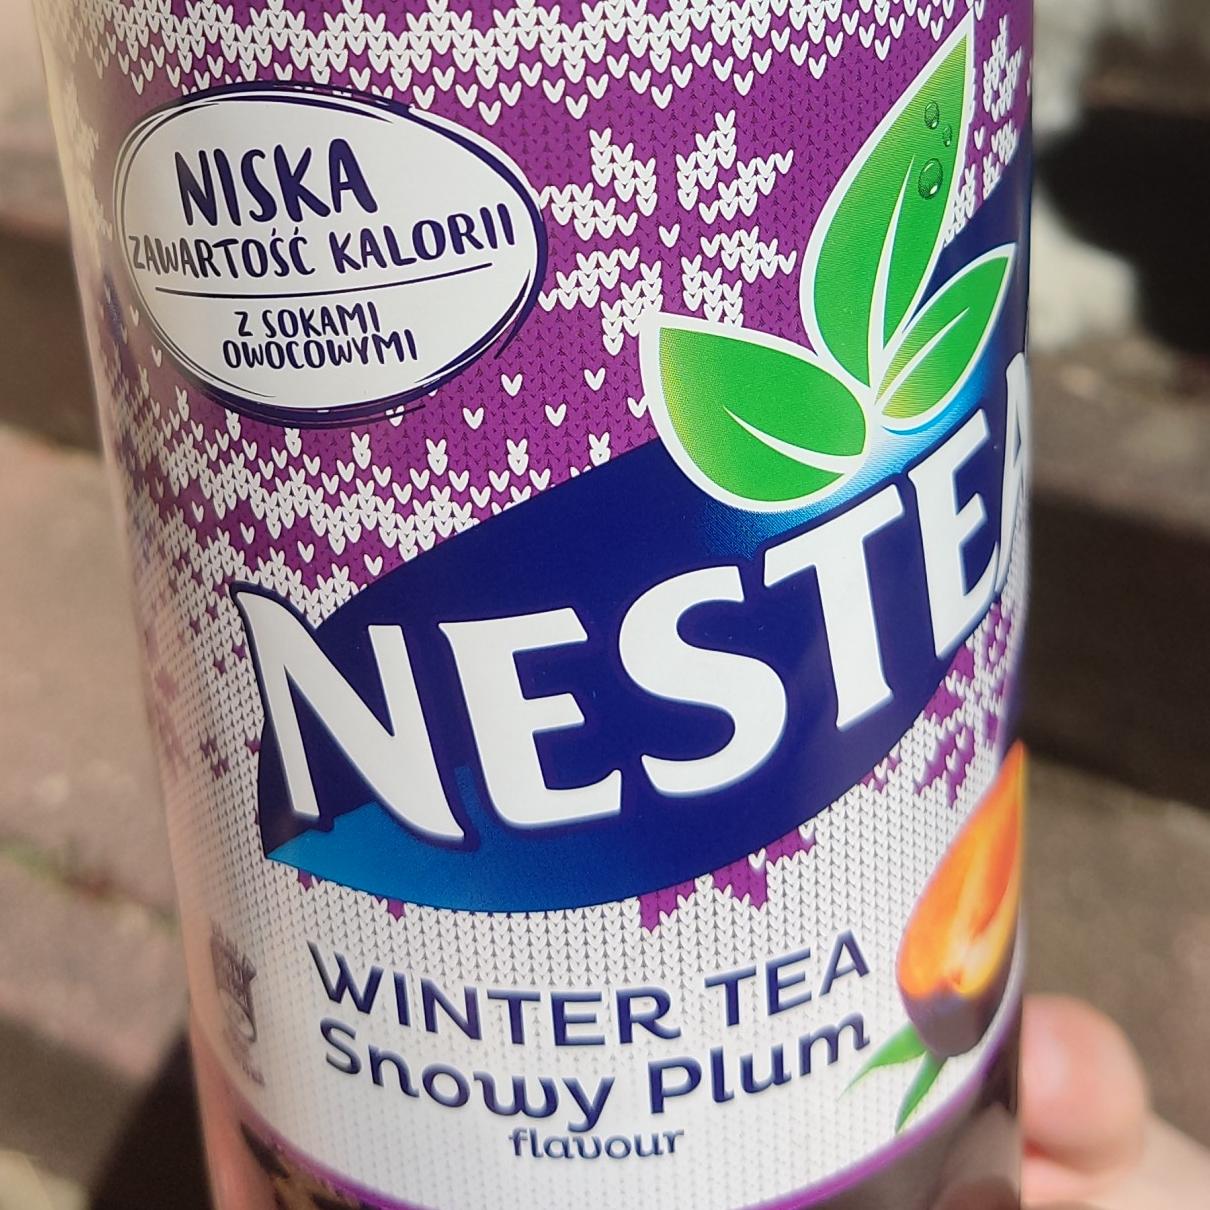 Zdjęcia - Nestea winter tea